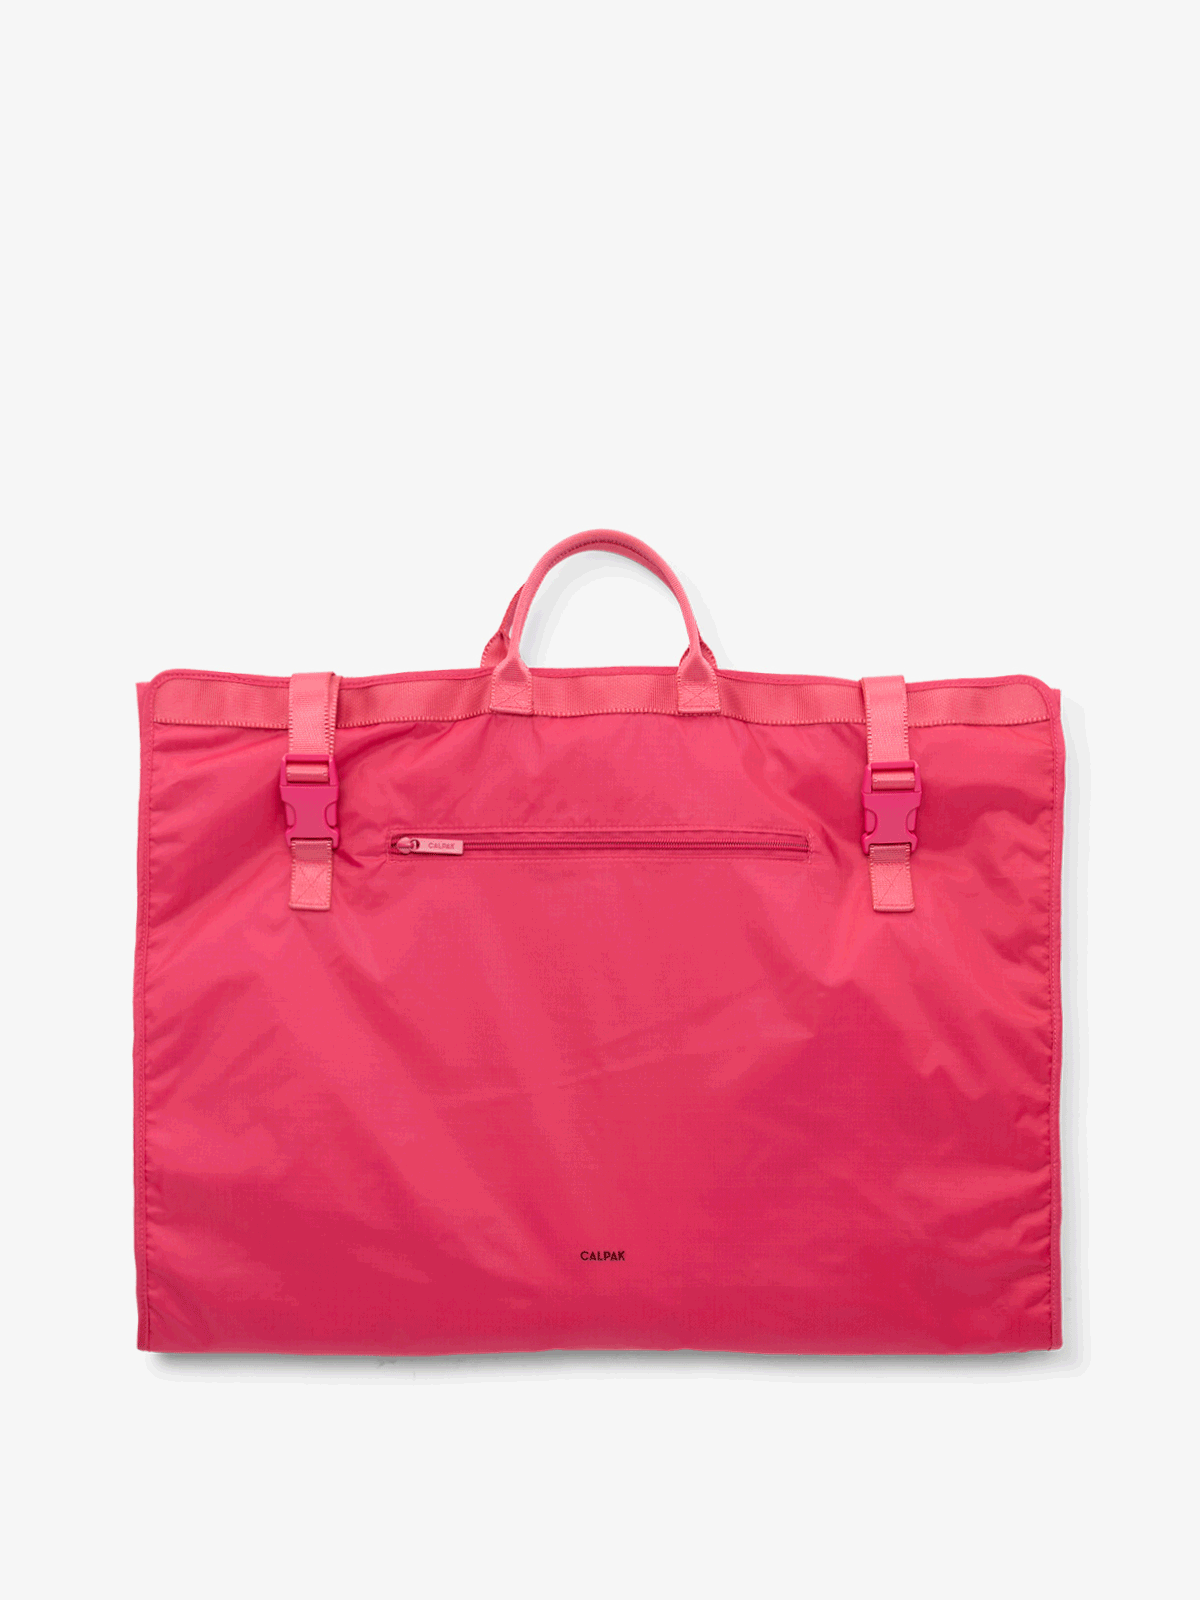 CALPAK Compakt large foldable garment bag in dragonfruit